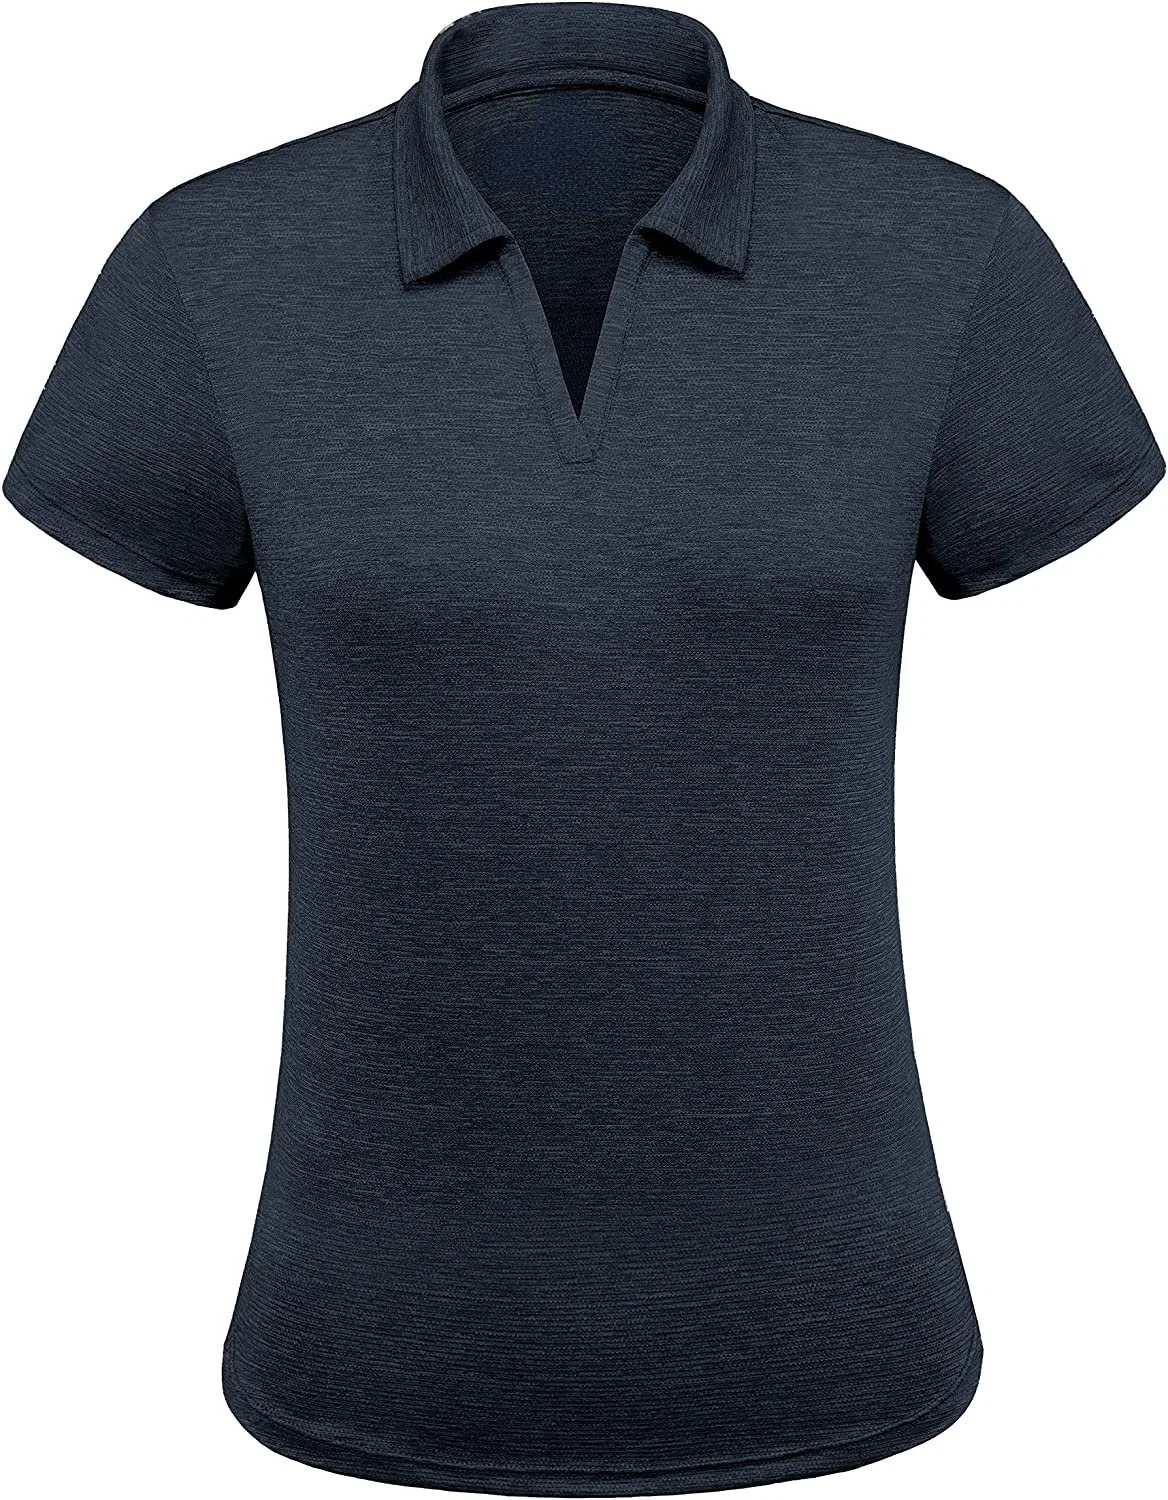 Golf Shirts Short Sleeves Golf Clothing V-Neck Running Shirts for Women